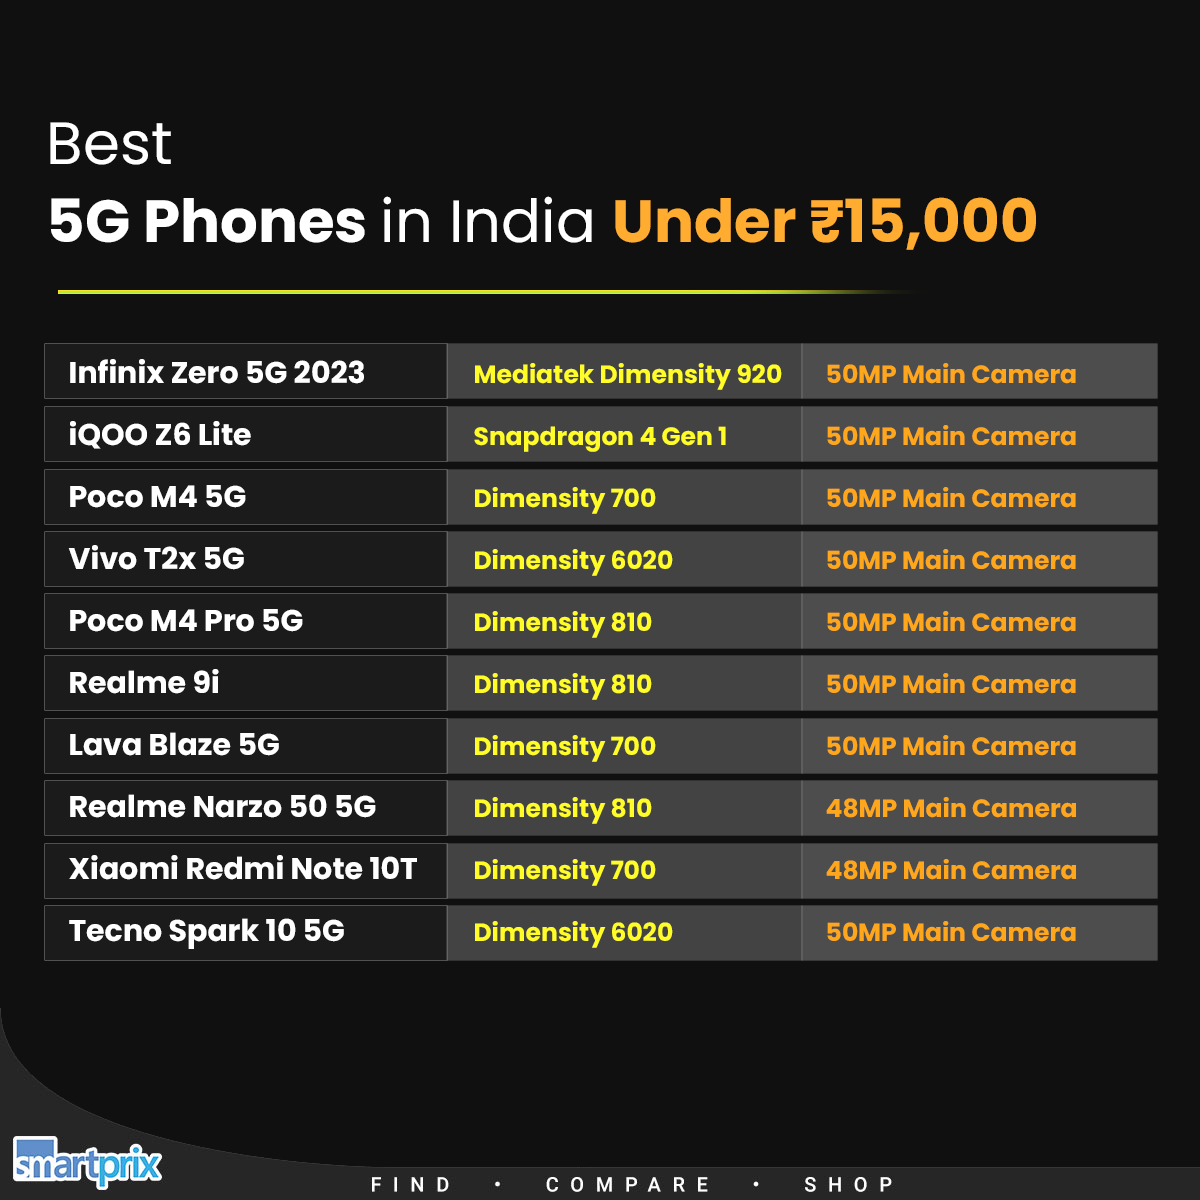 Budget-Friendly 5G Phones Under ₹15,000 in India smpx.to/mbU0dQ

#BudgetFriendly #5G #5GPhones #InfinixZero5G #iQOOZ6Lite #PocoM4 #VivoT2x #PocoM4Pro #Realme9i #LavaBlaze #RealmeNarzo50 #RedmiNote10T #TecnoSpark10